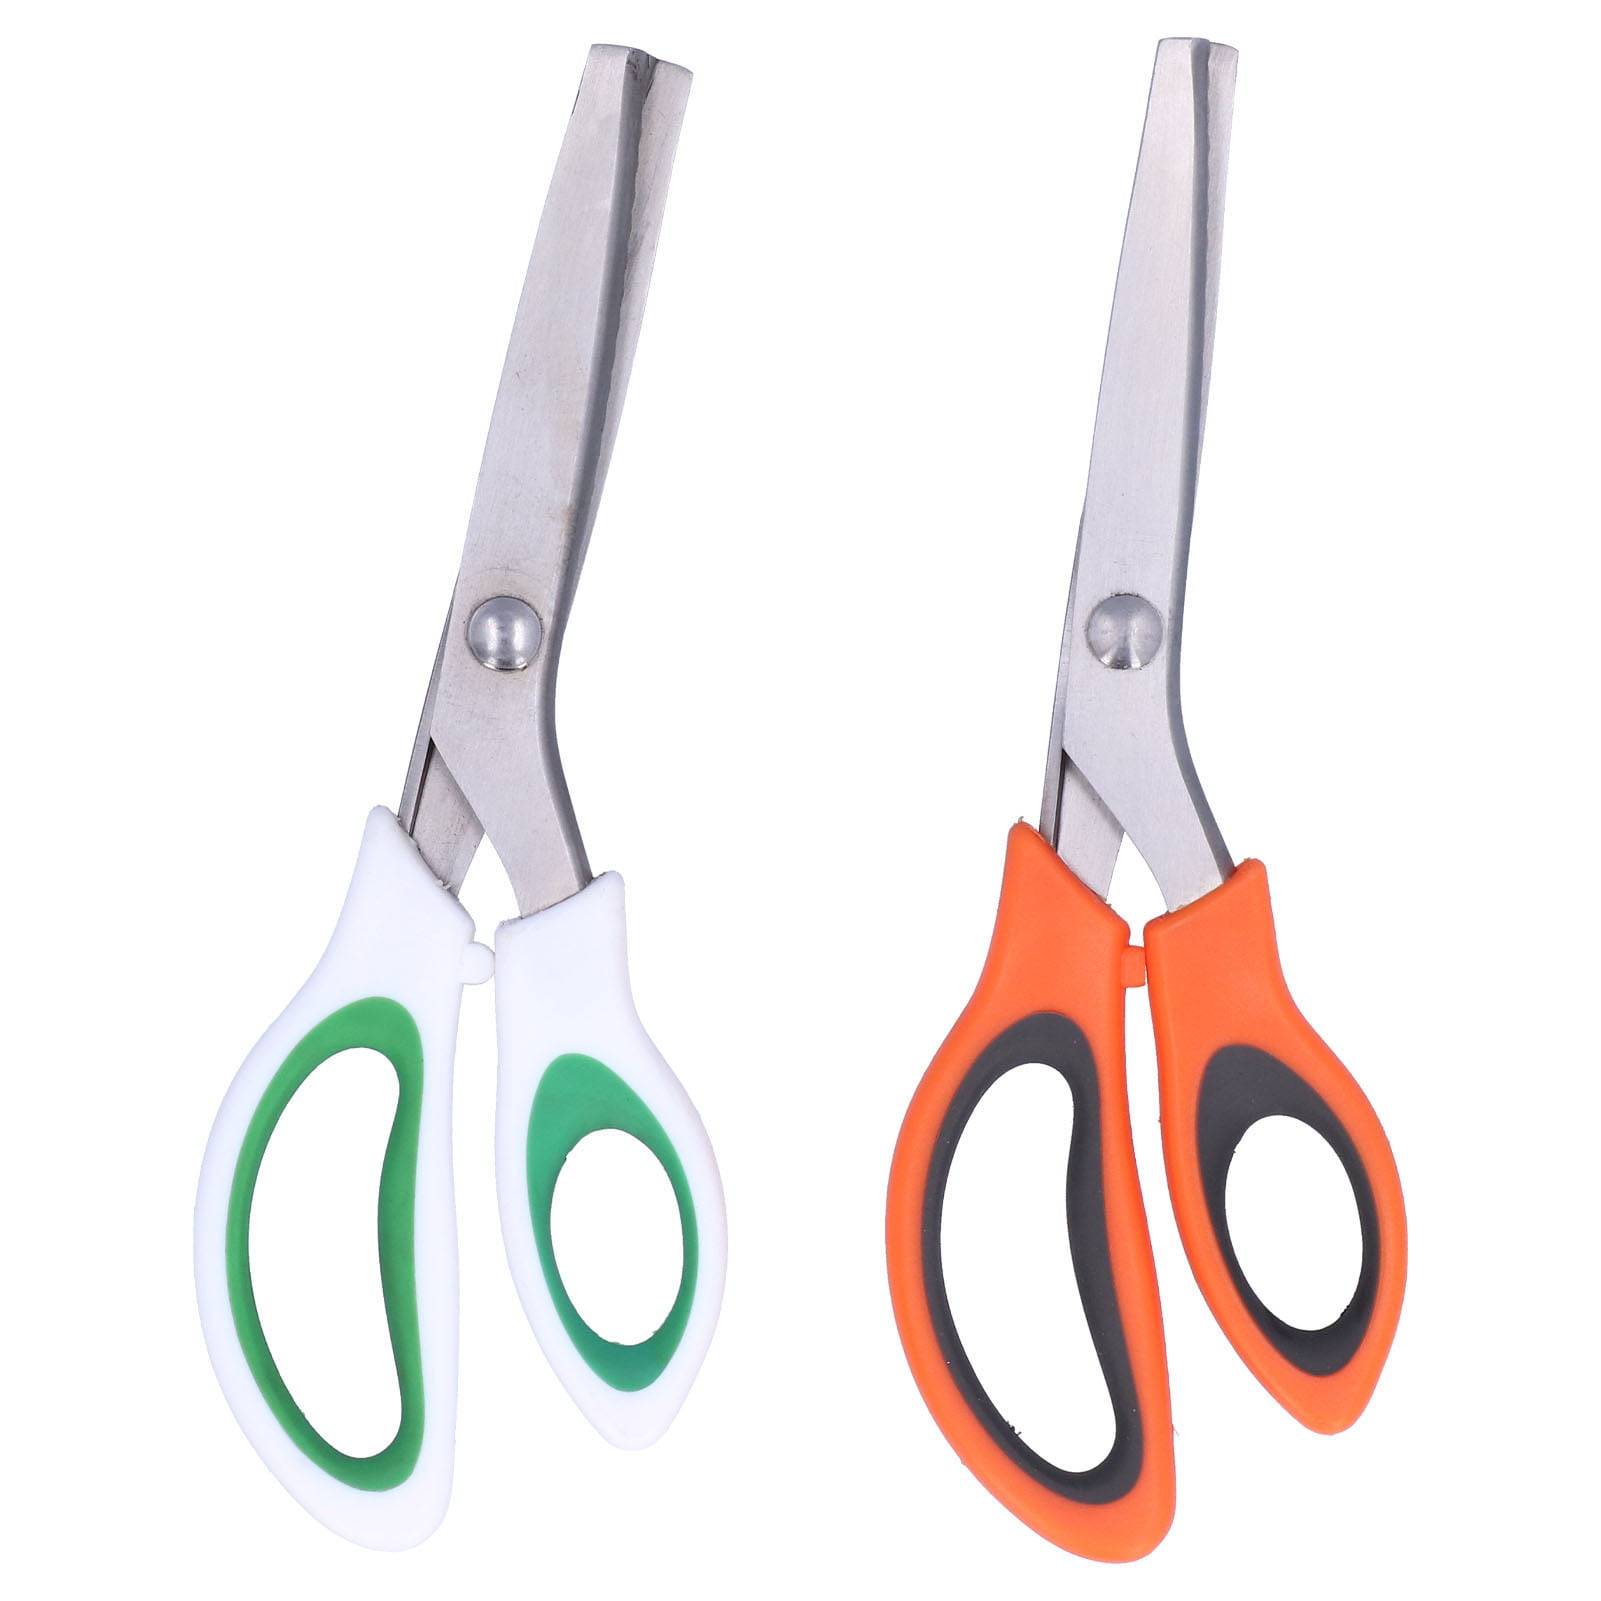 stainless steel 2x Scissors GREEN Great cutting quality ergonomic handles 